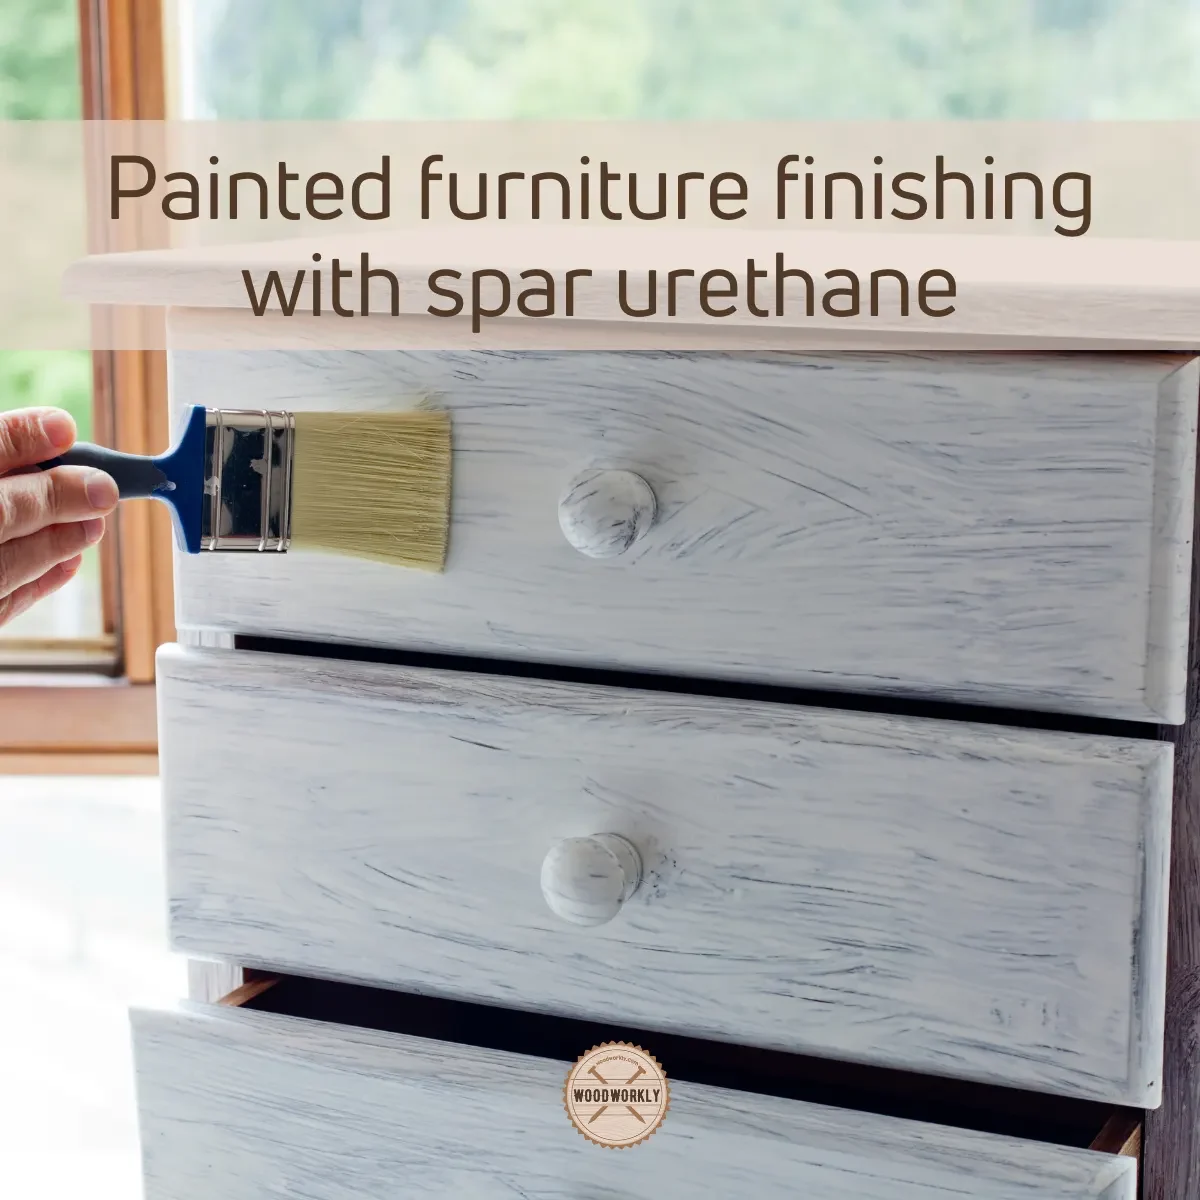 Painted furniture finishing with spar urethane